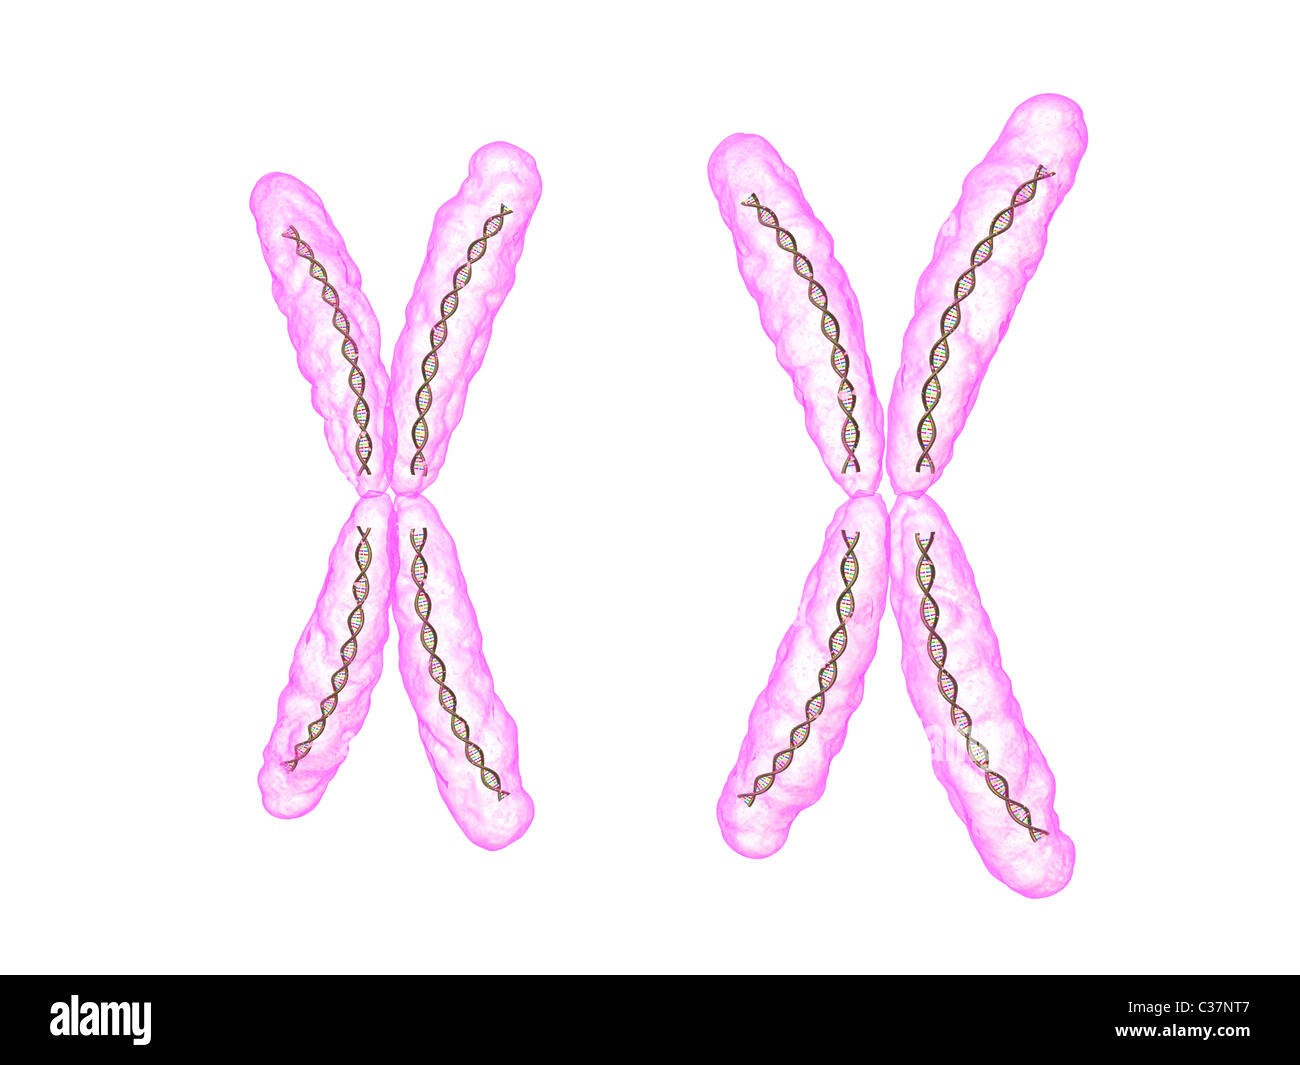 x - chromosome Stock Photo